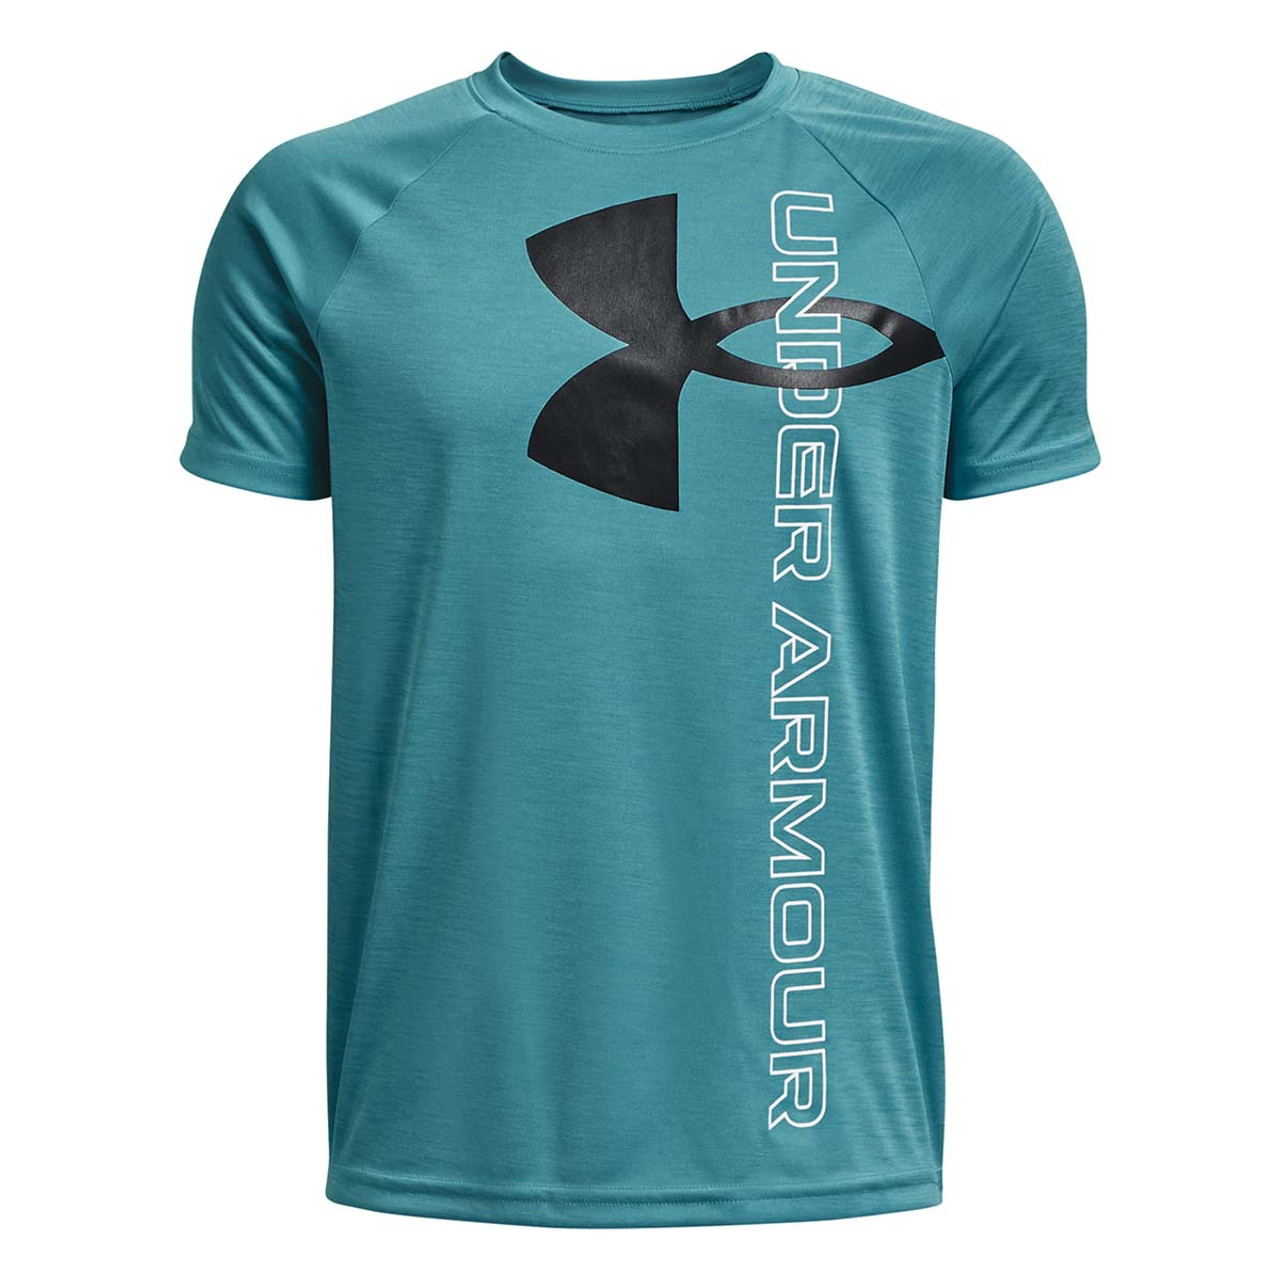 Under Armour Boys' Tech Split Logo Hybrid Short-Sleeve T-Shirt